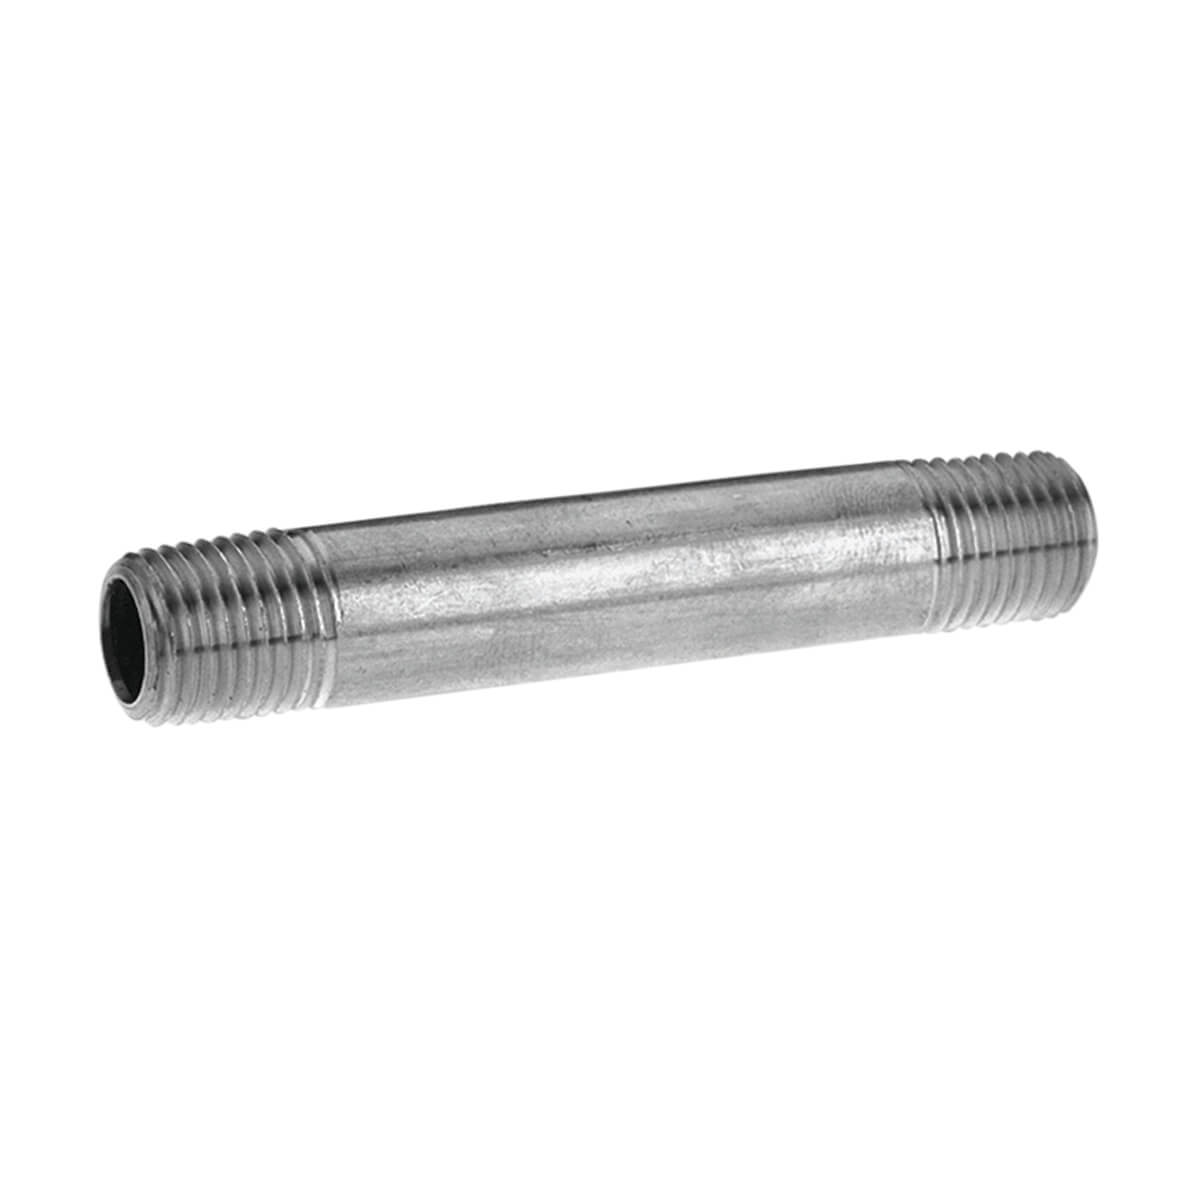 Pipe Nipple Galvanized Steel - 3/4-in x CLOSE